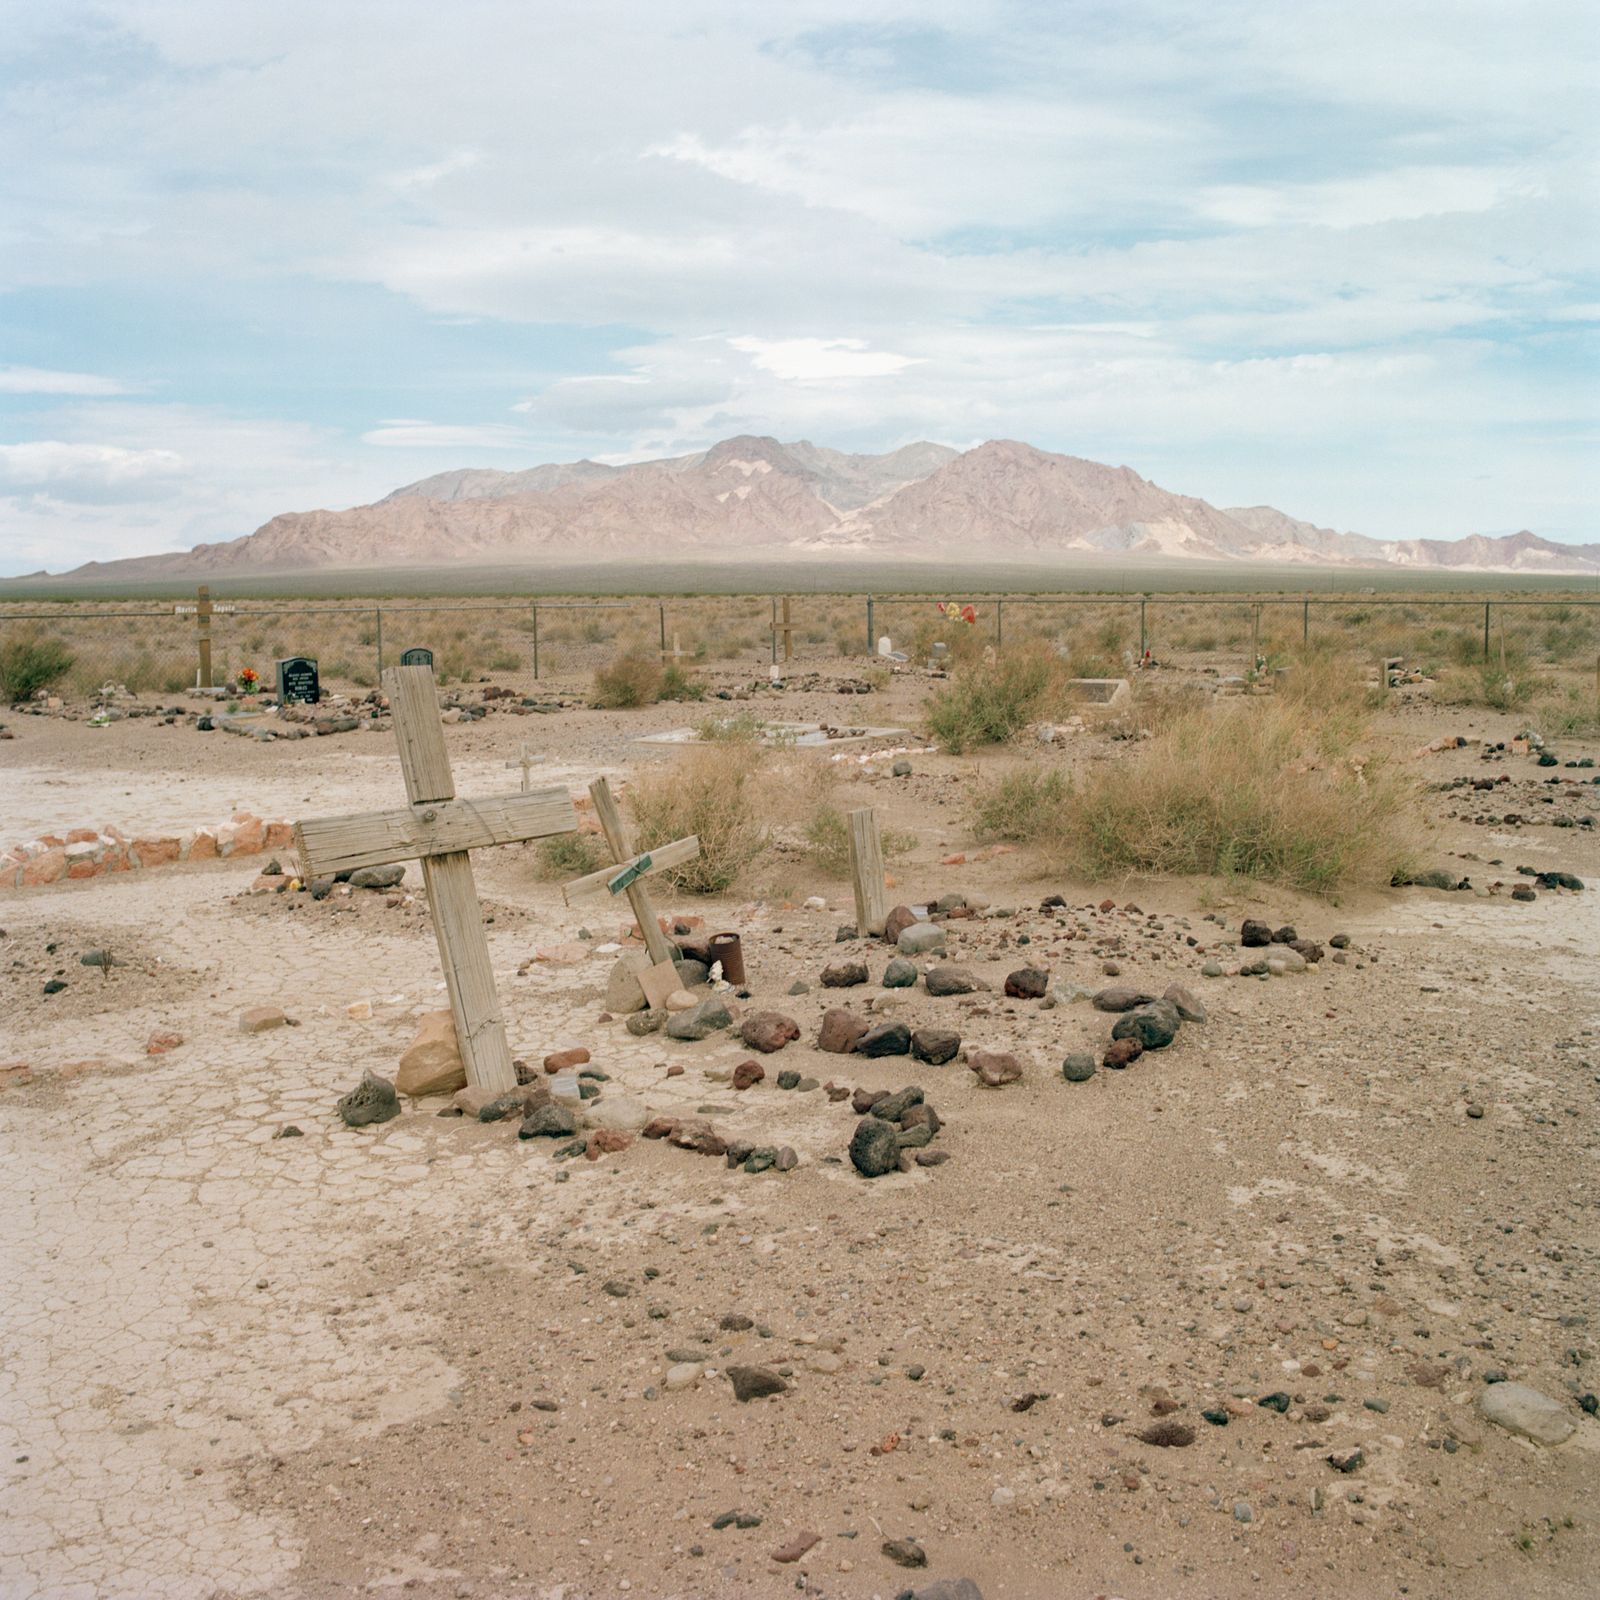 © Louise Amelie - "Death Valley" Graveyard in Nevada.